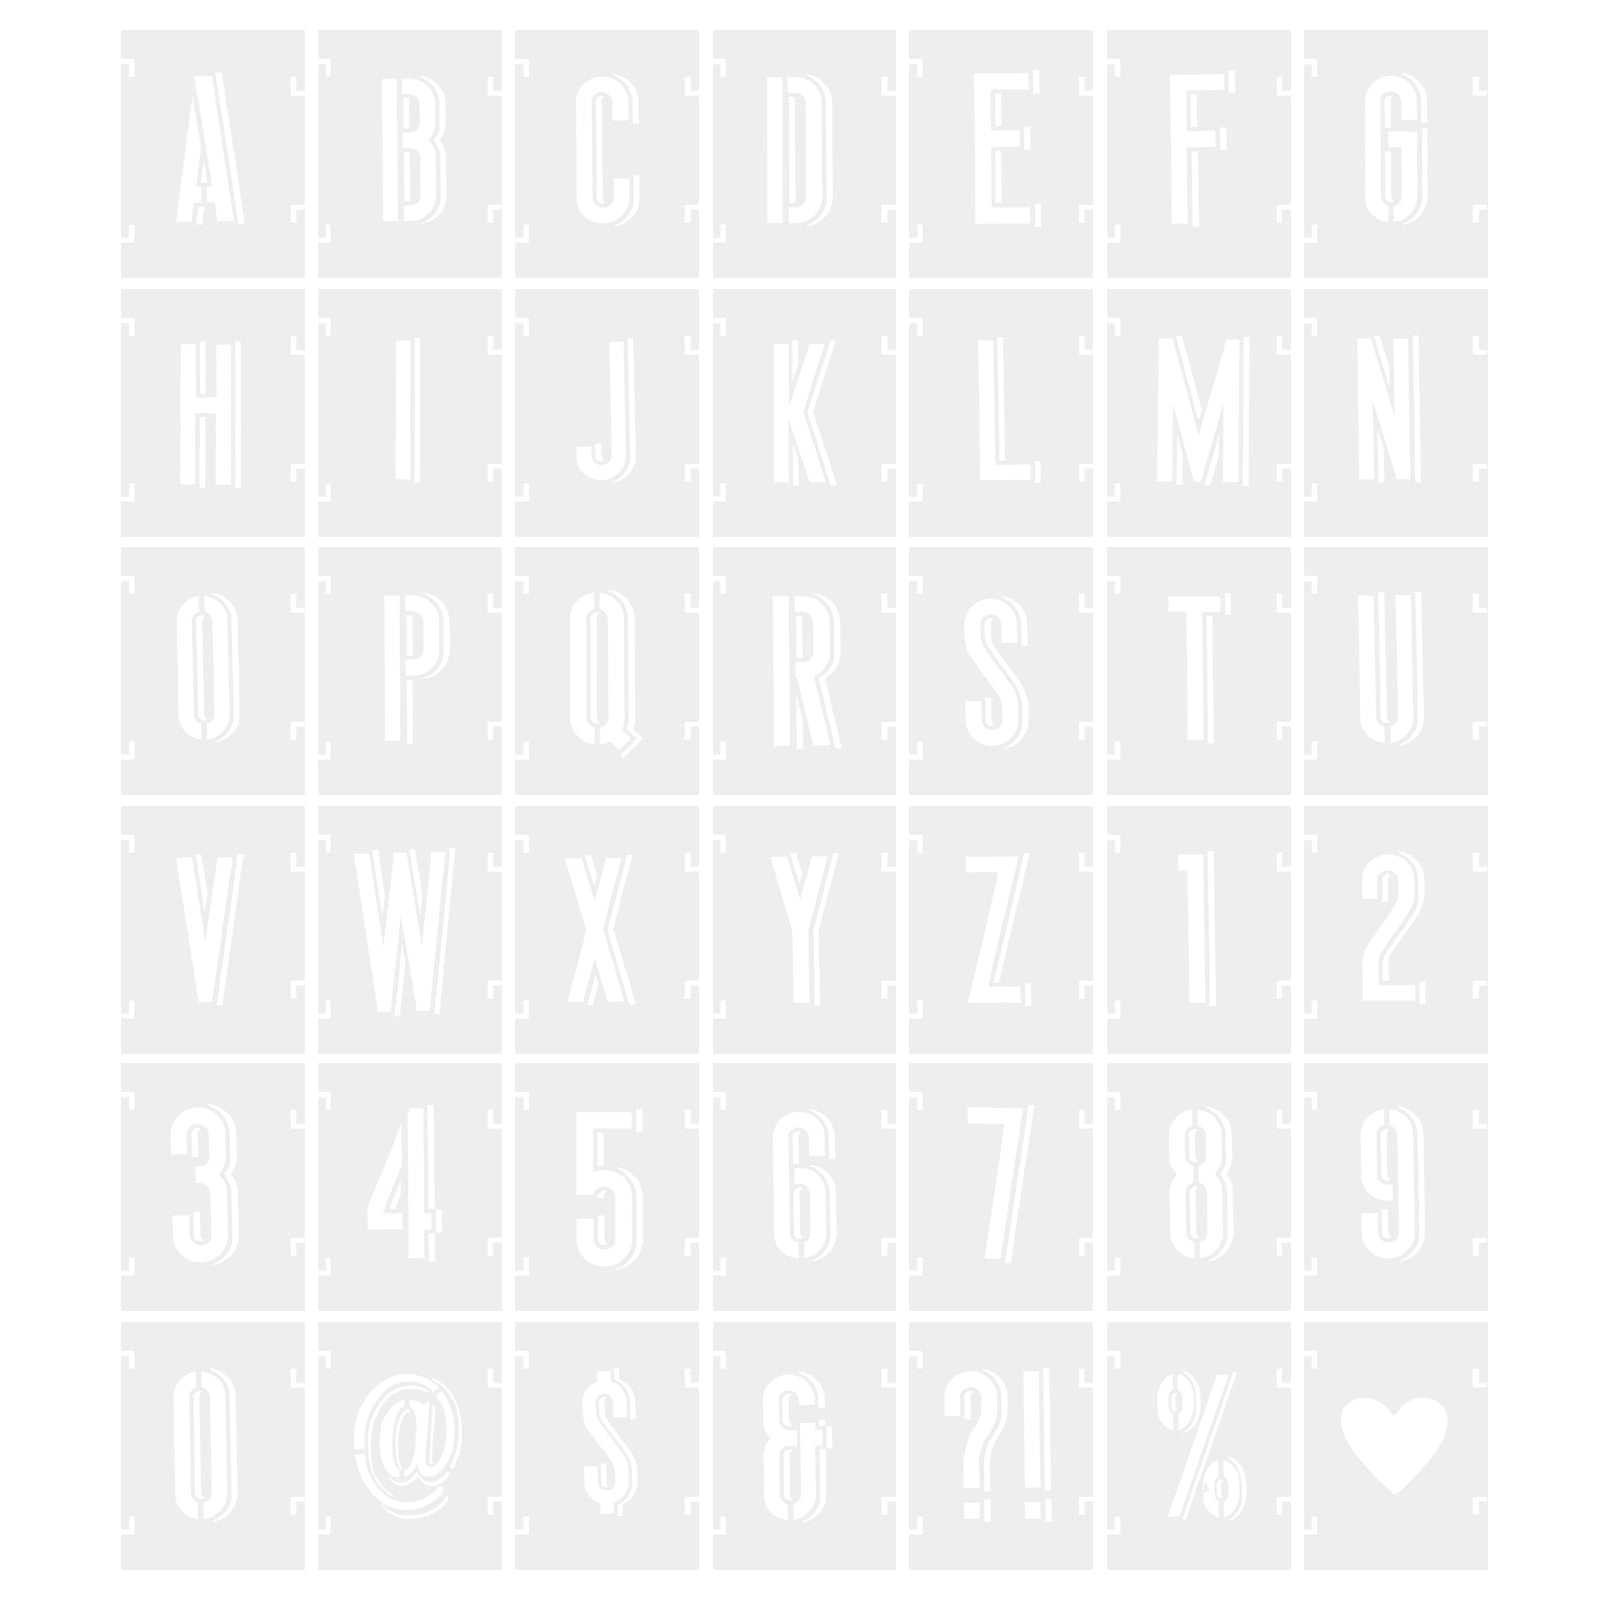 Letter Stencils, 8 Pack, 4 x 8 Inch, Alphabet Stencils, Letter